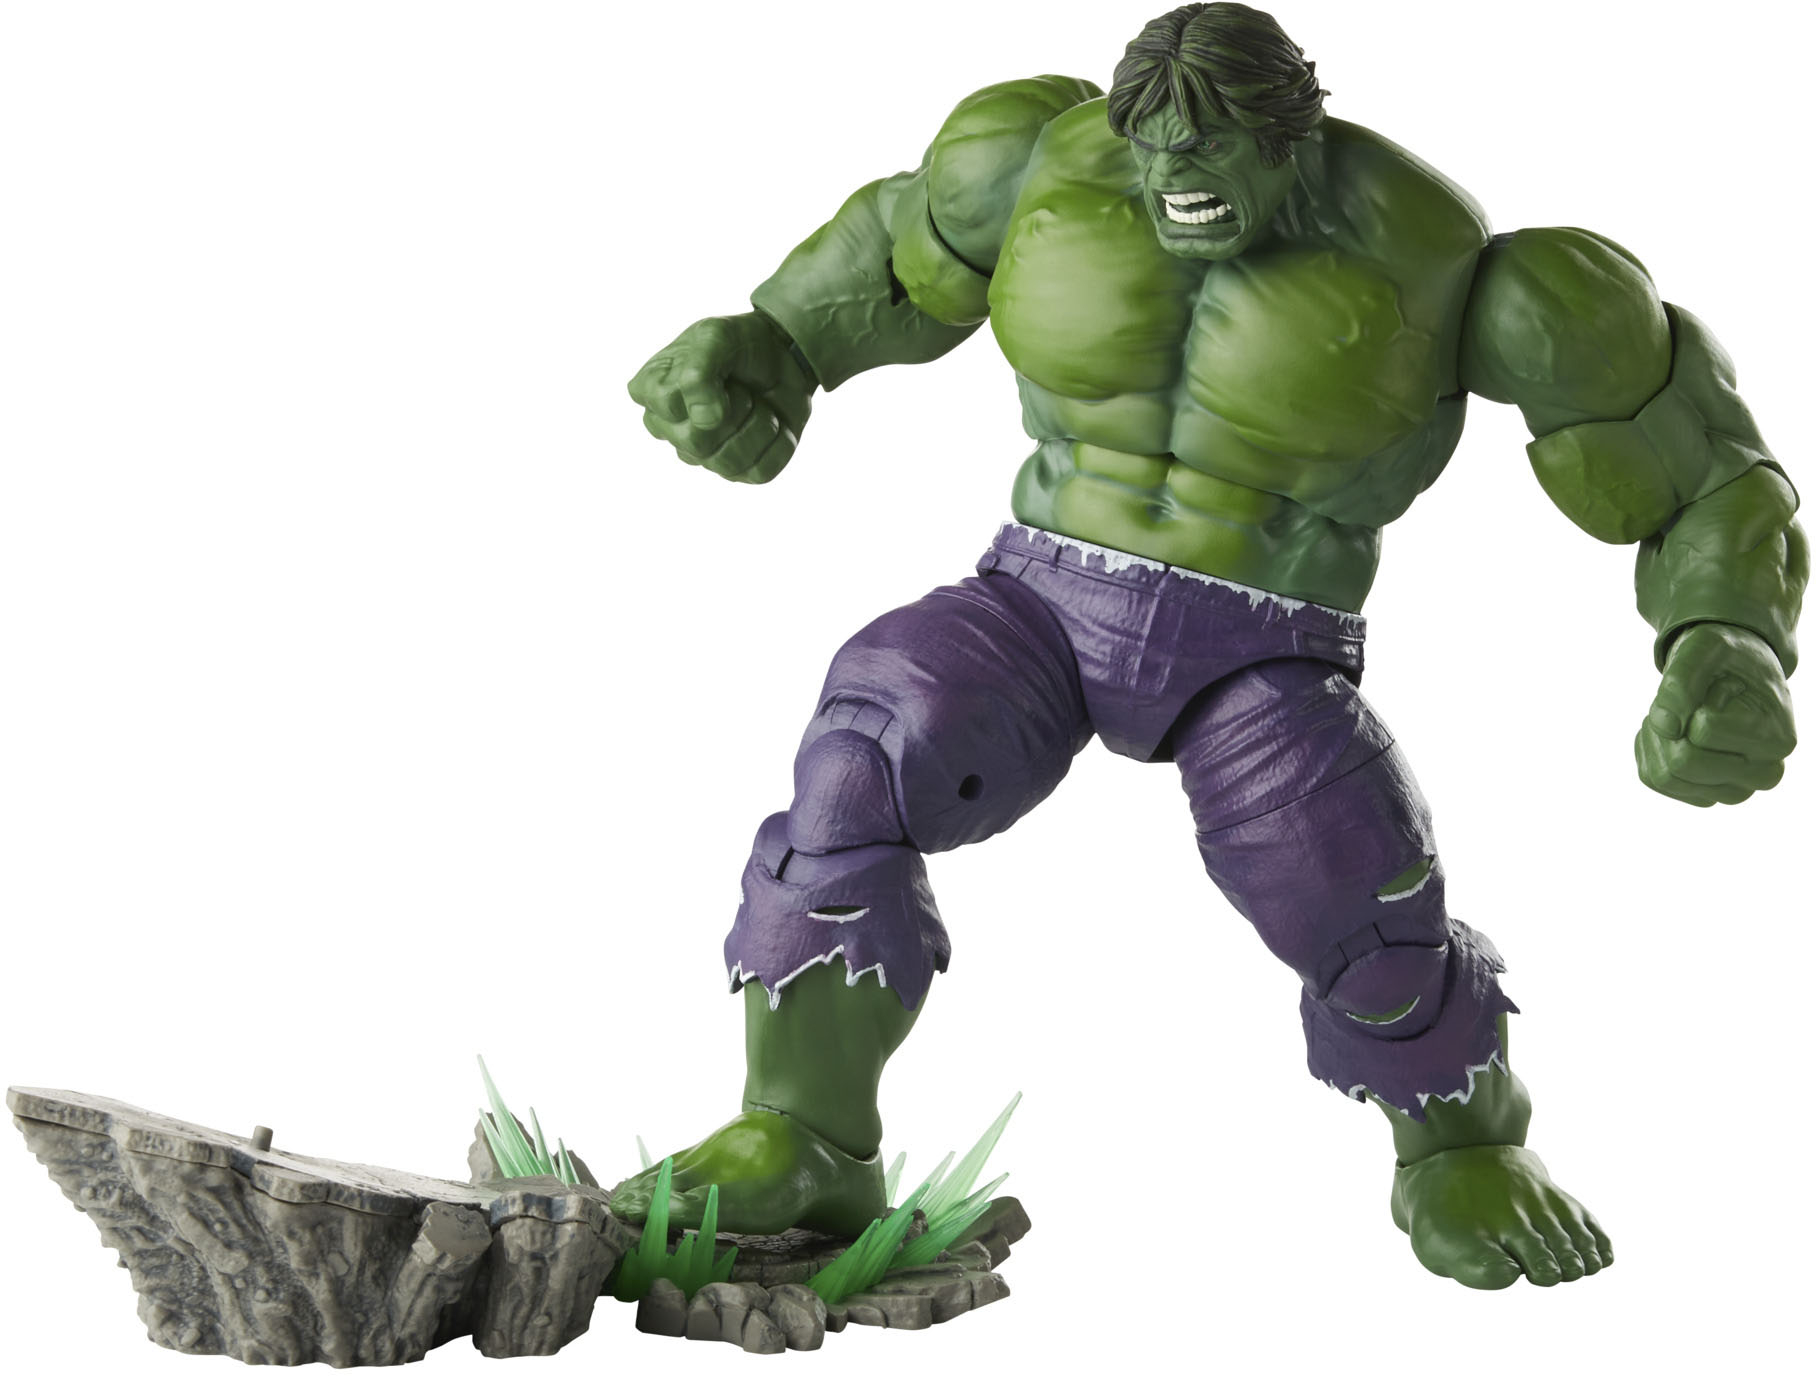 Hulk Life Size 1:1 Rare Limited Marvel License Figure Incredible Hulk